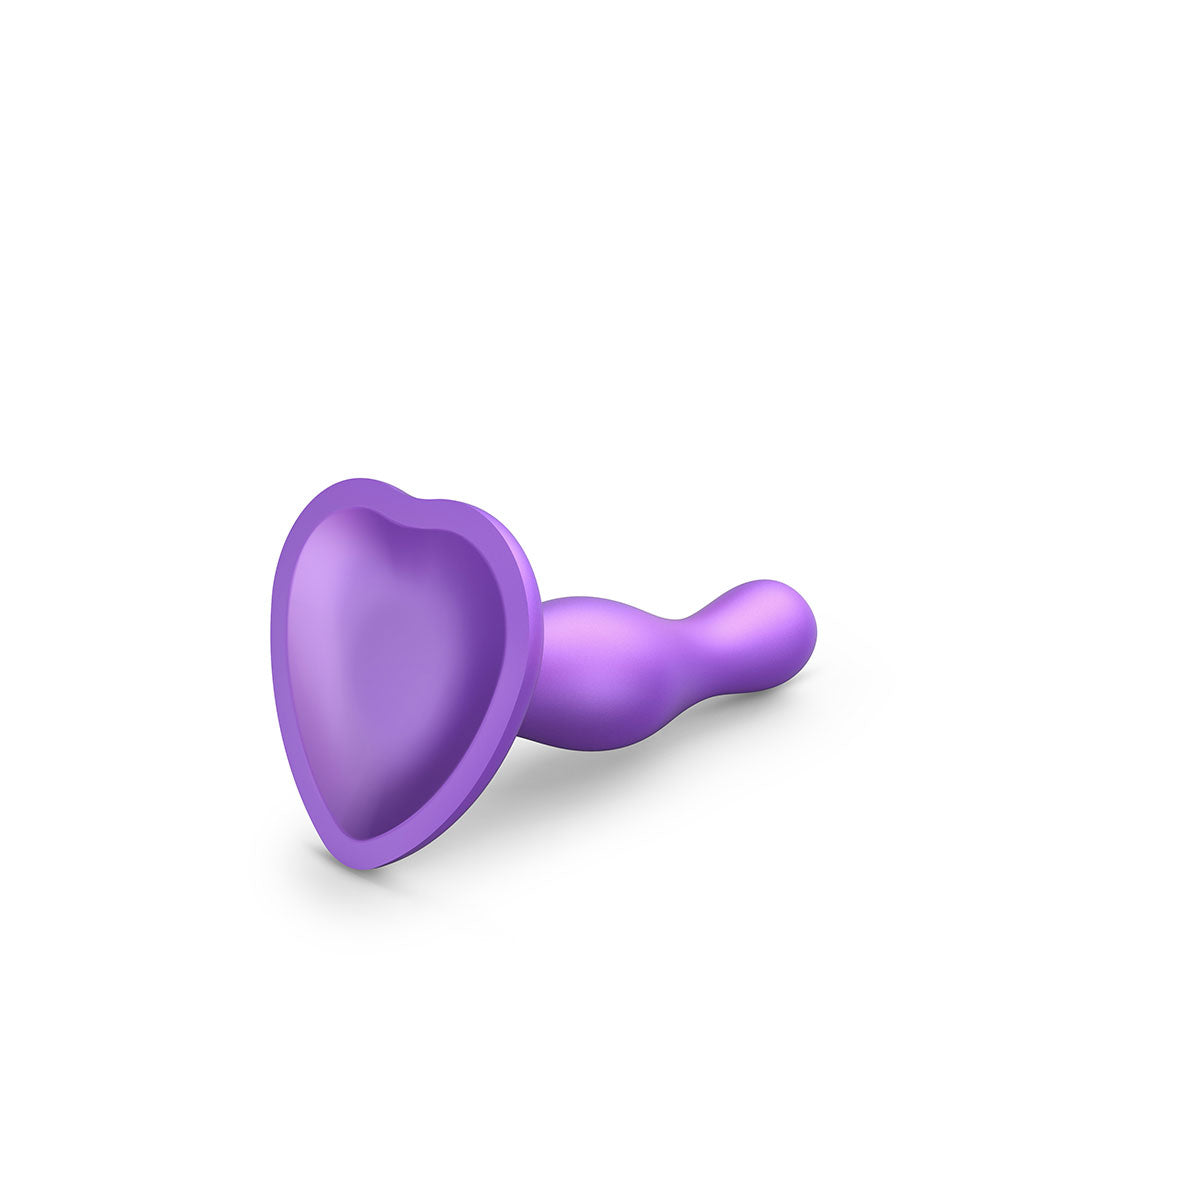 Strap-On-Me Curvy Plug Dil Metallic Purple - Small